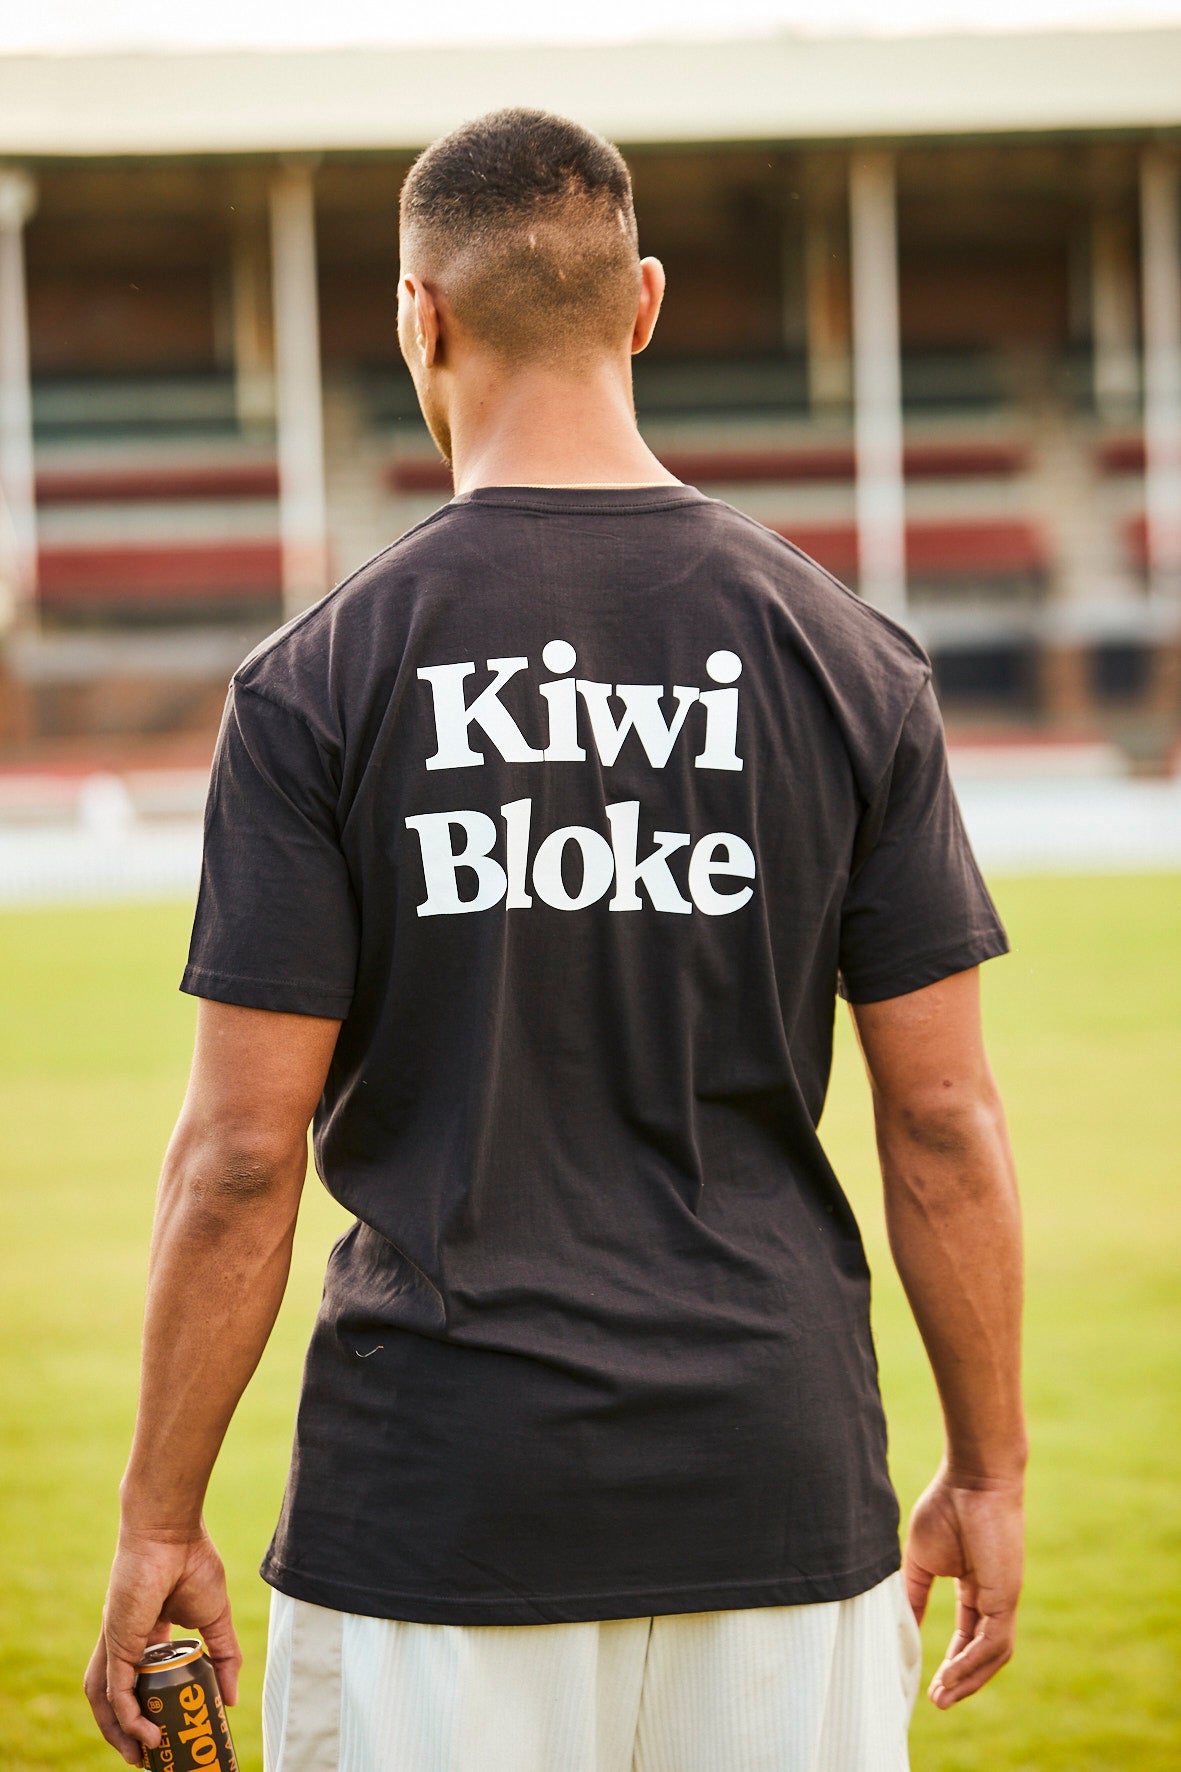 Kiwi bloke shirt